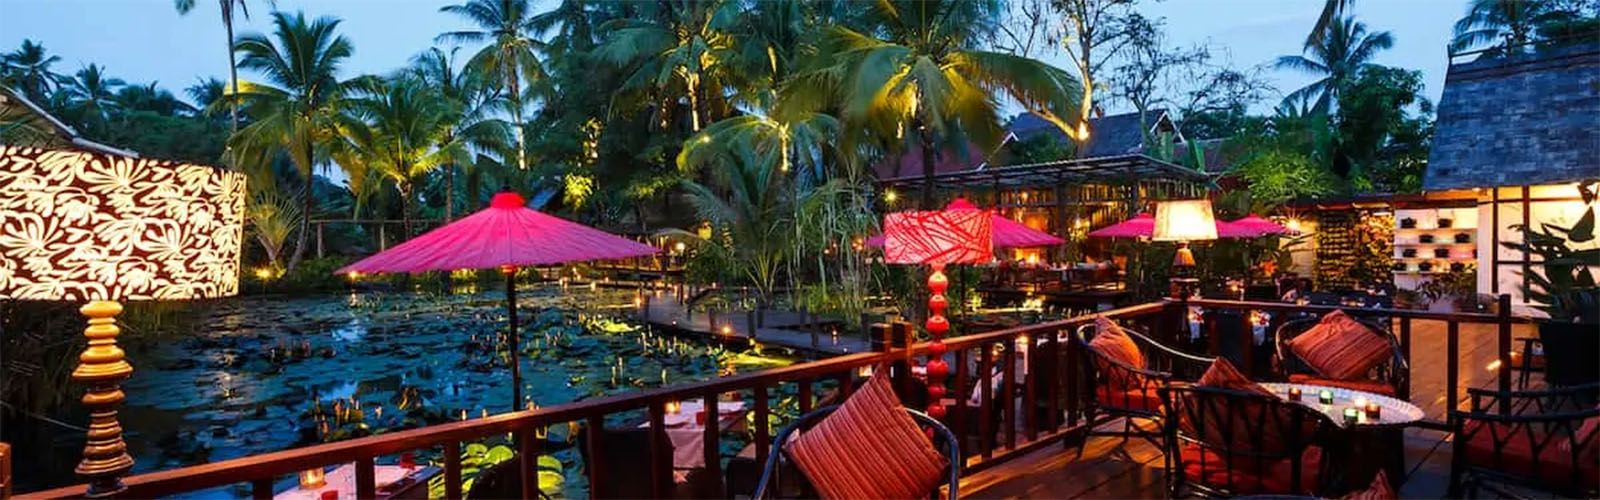 Famous Restaurants In Luang Prabang | best place | Asianventure Tours